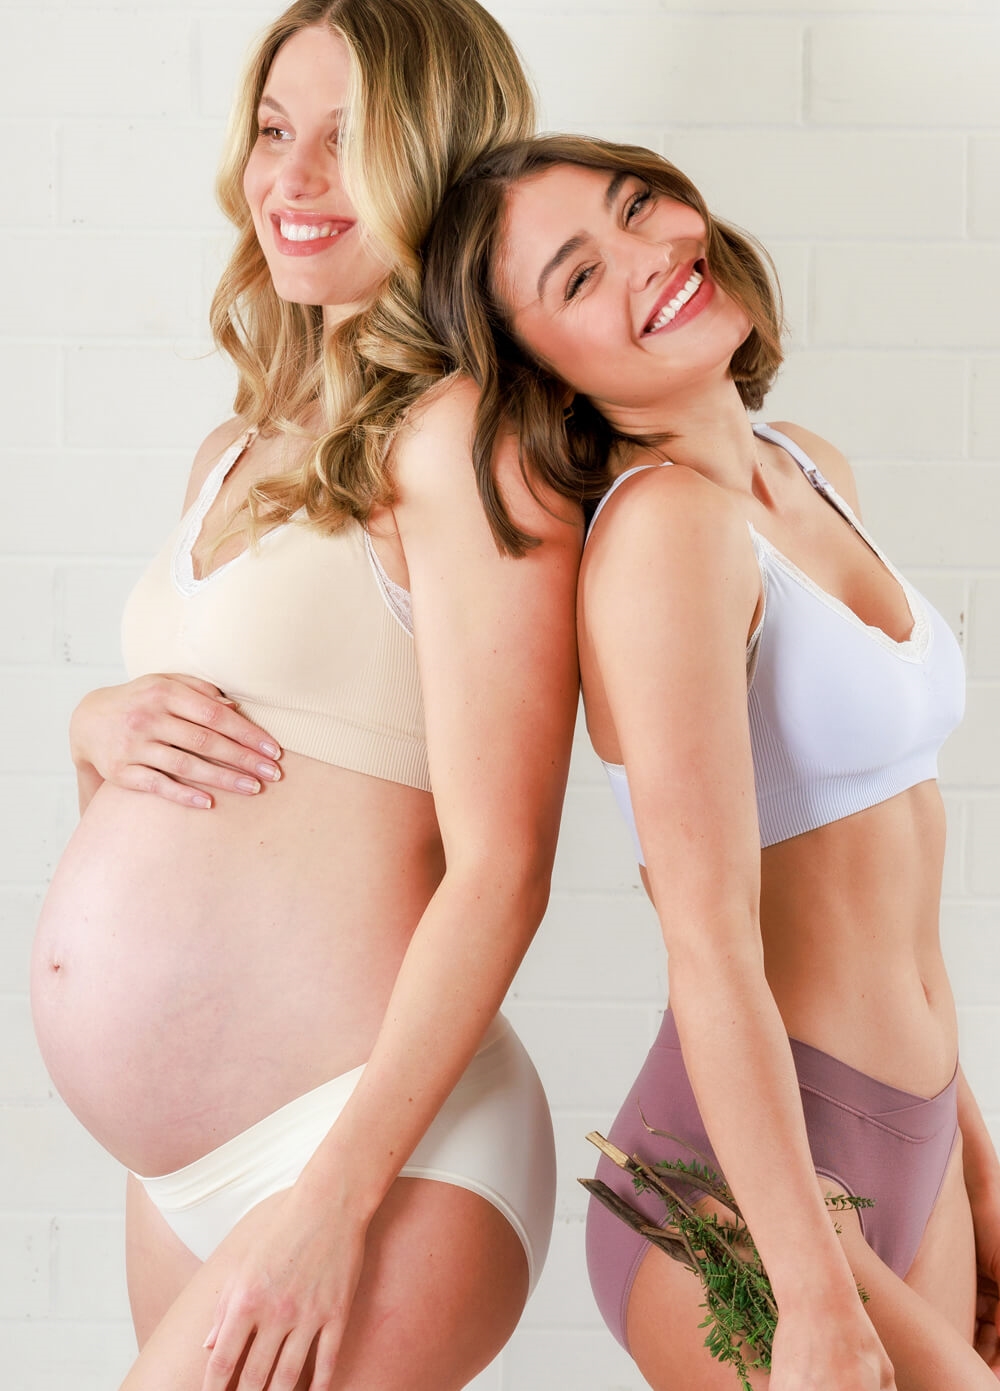 Emily B Daisy maternity bra - Maternity bras - Pregnancy